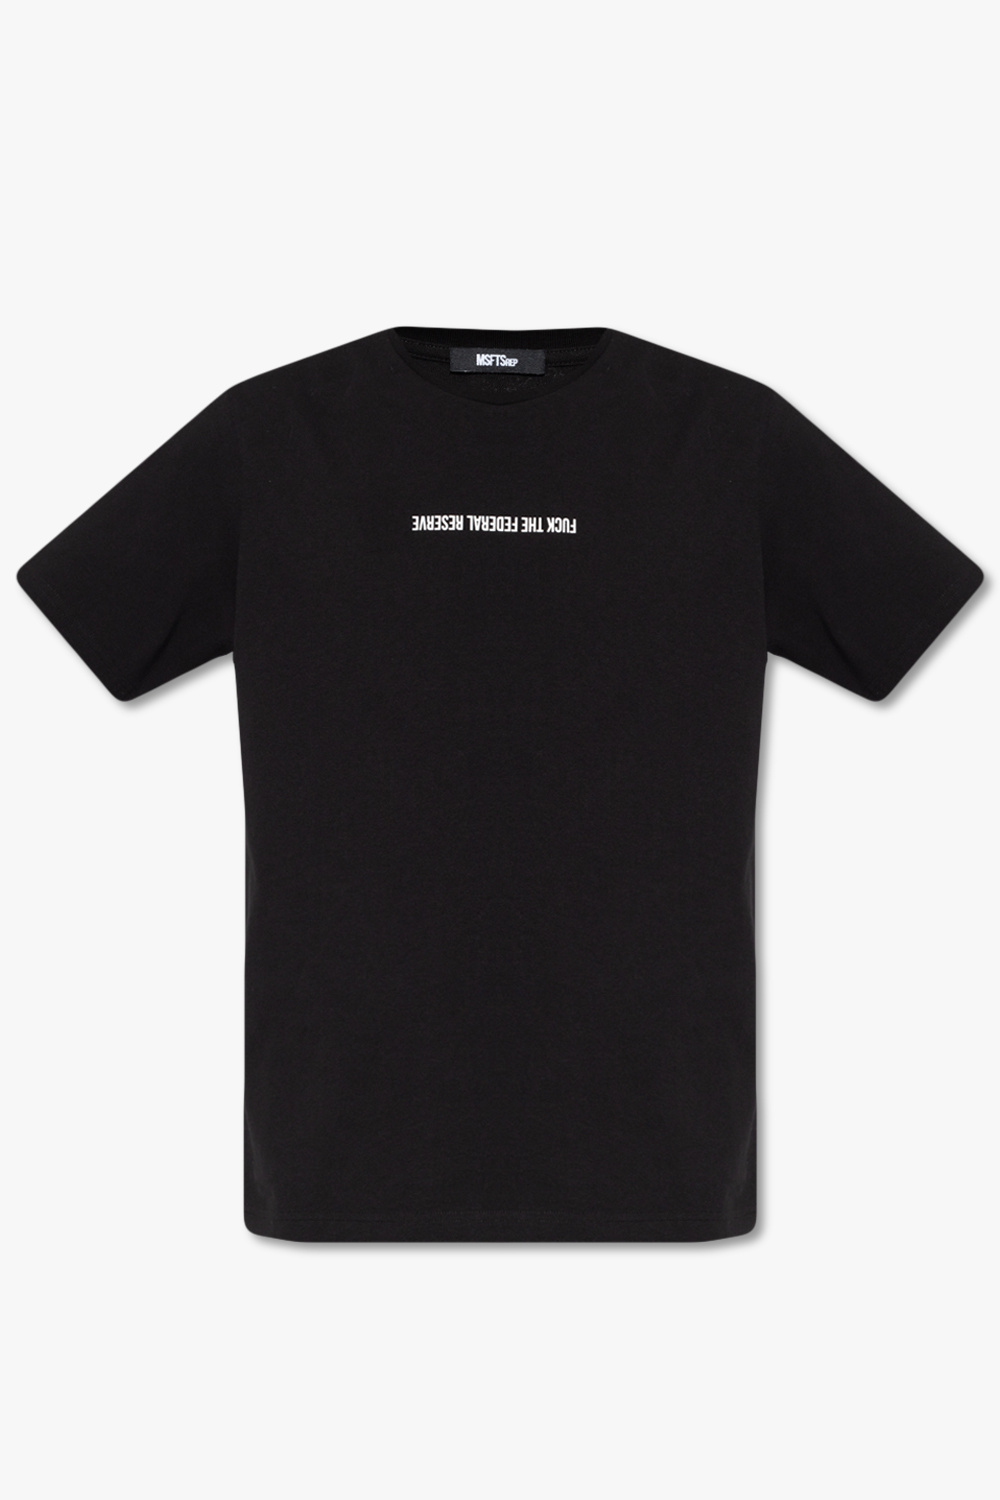 StclaircomoShops NC - T Alexander shirt Black - MSFTSrep - Pullover Printed Herzausschnitt Nude mit McQueen